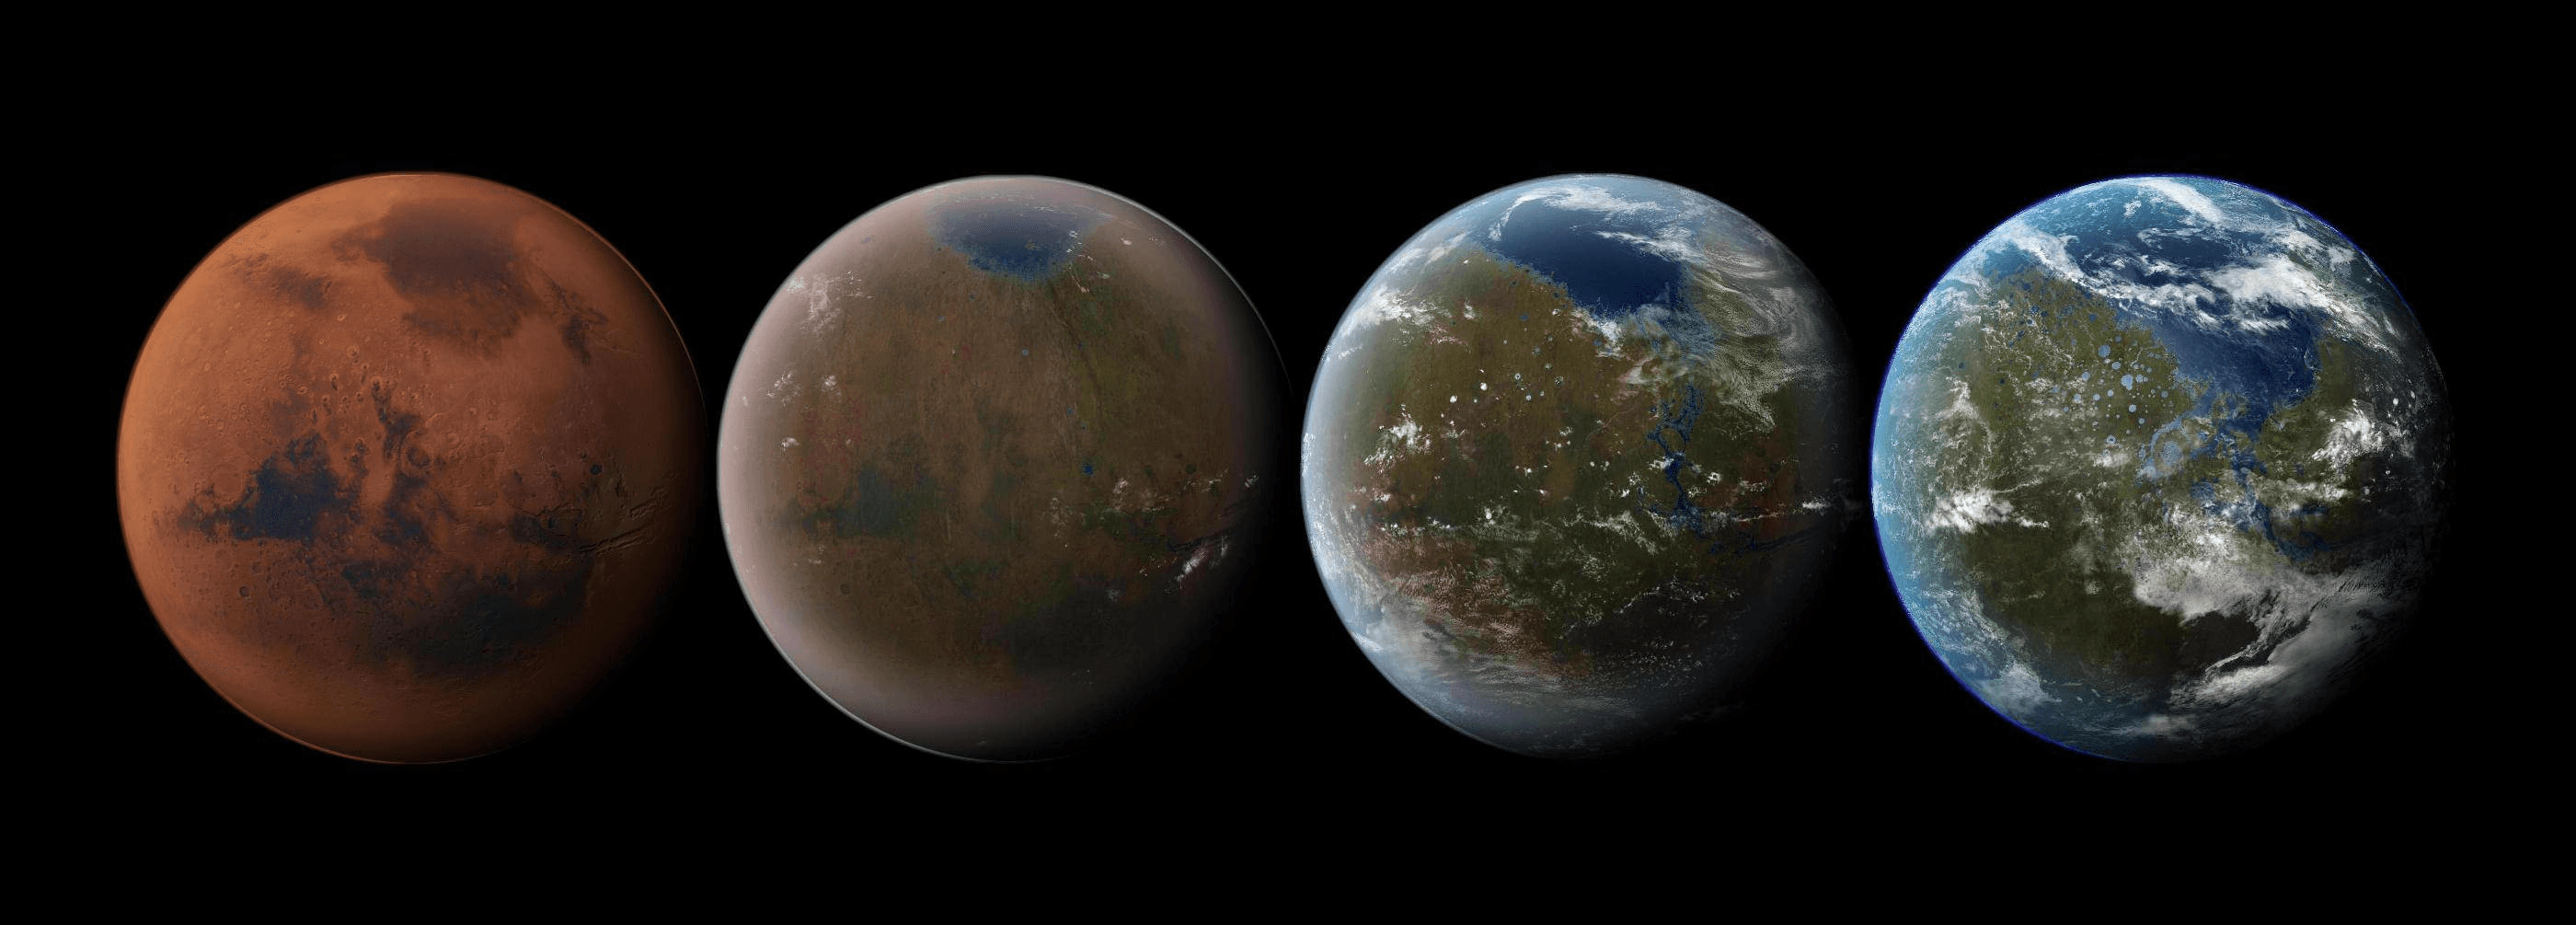 An Artist's visualization of Mars being terraformed